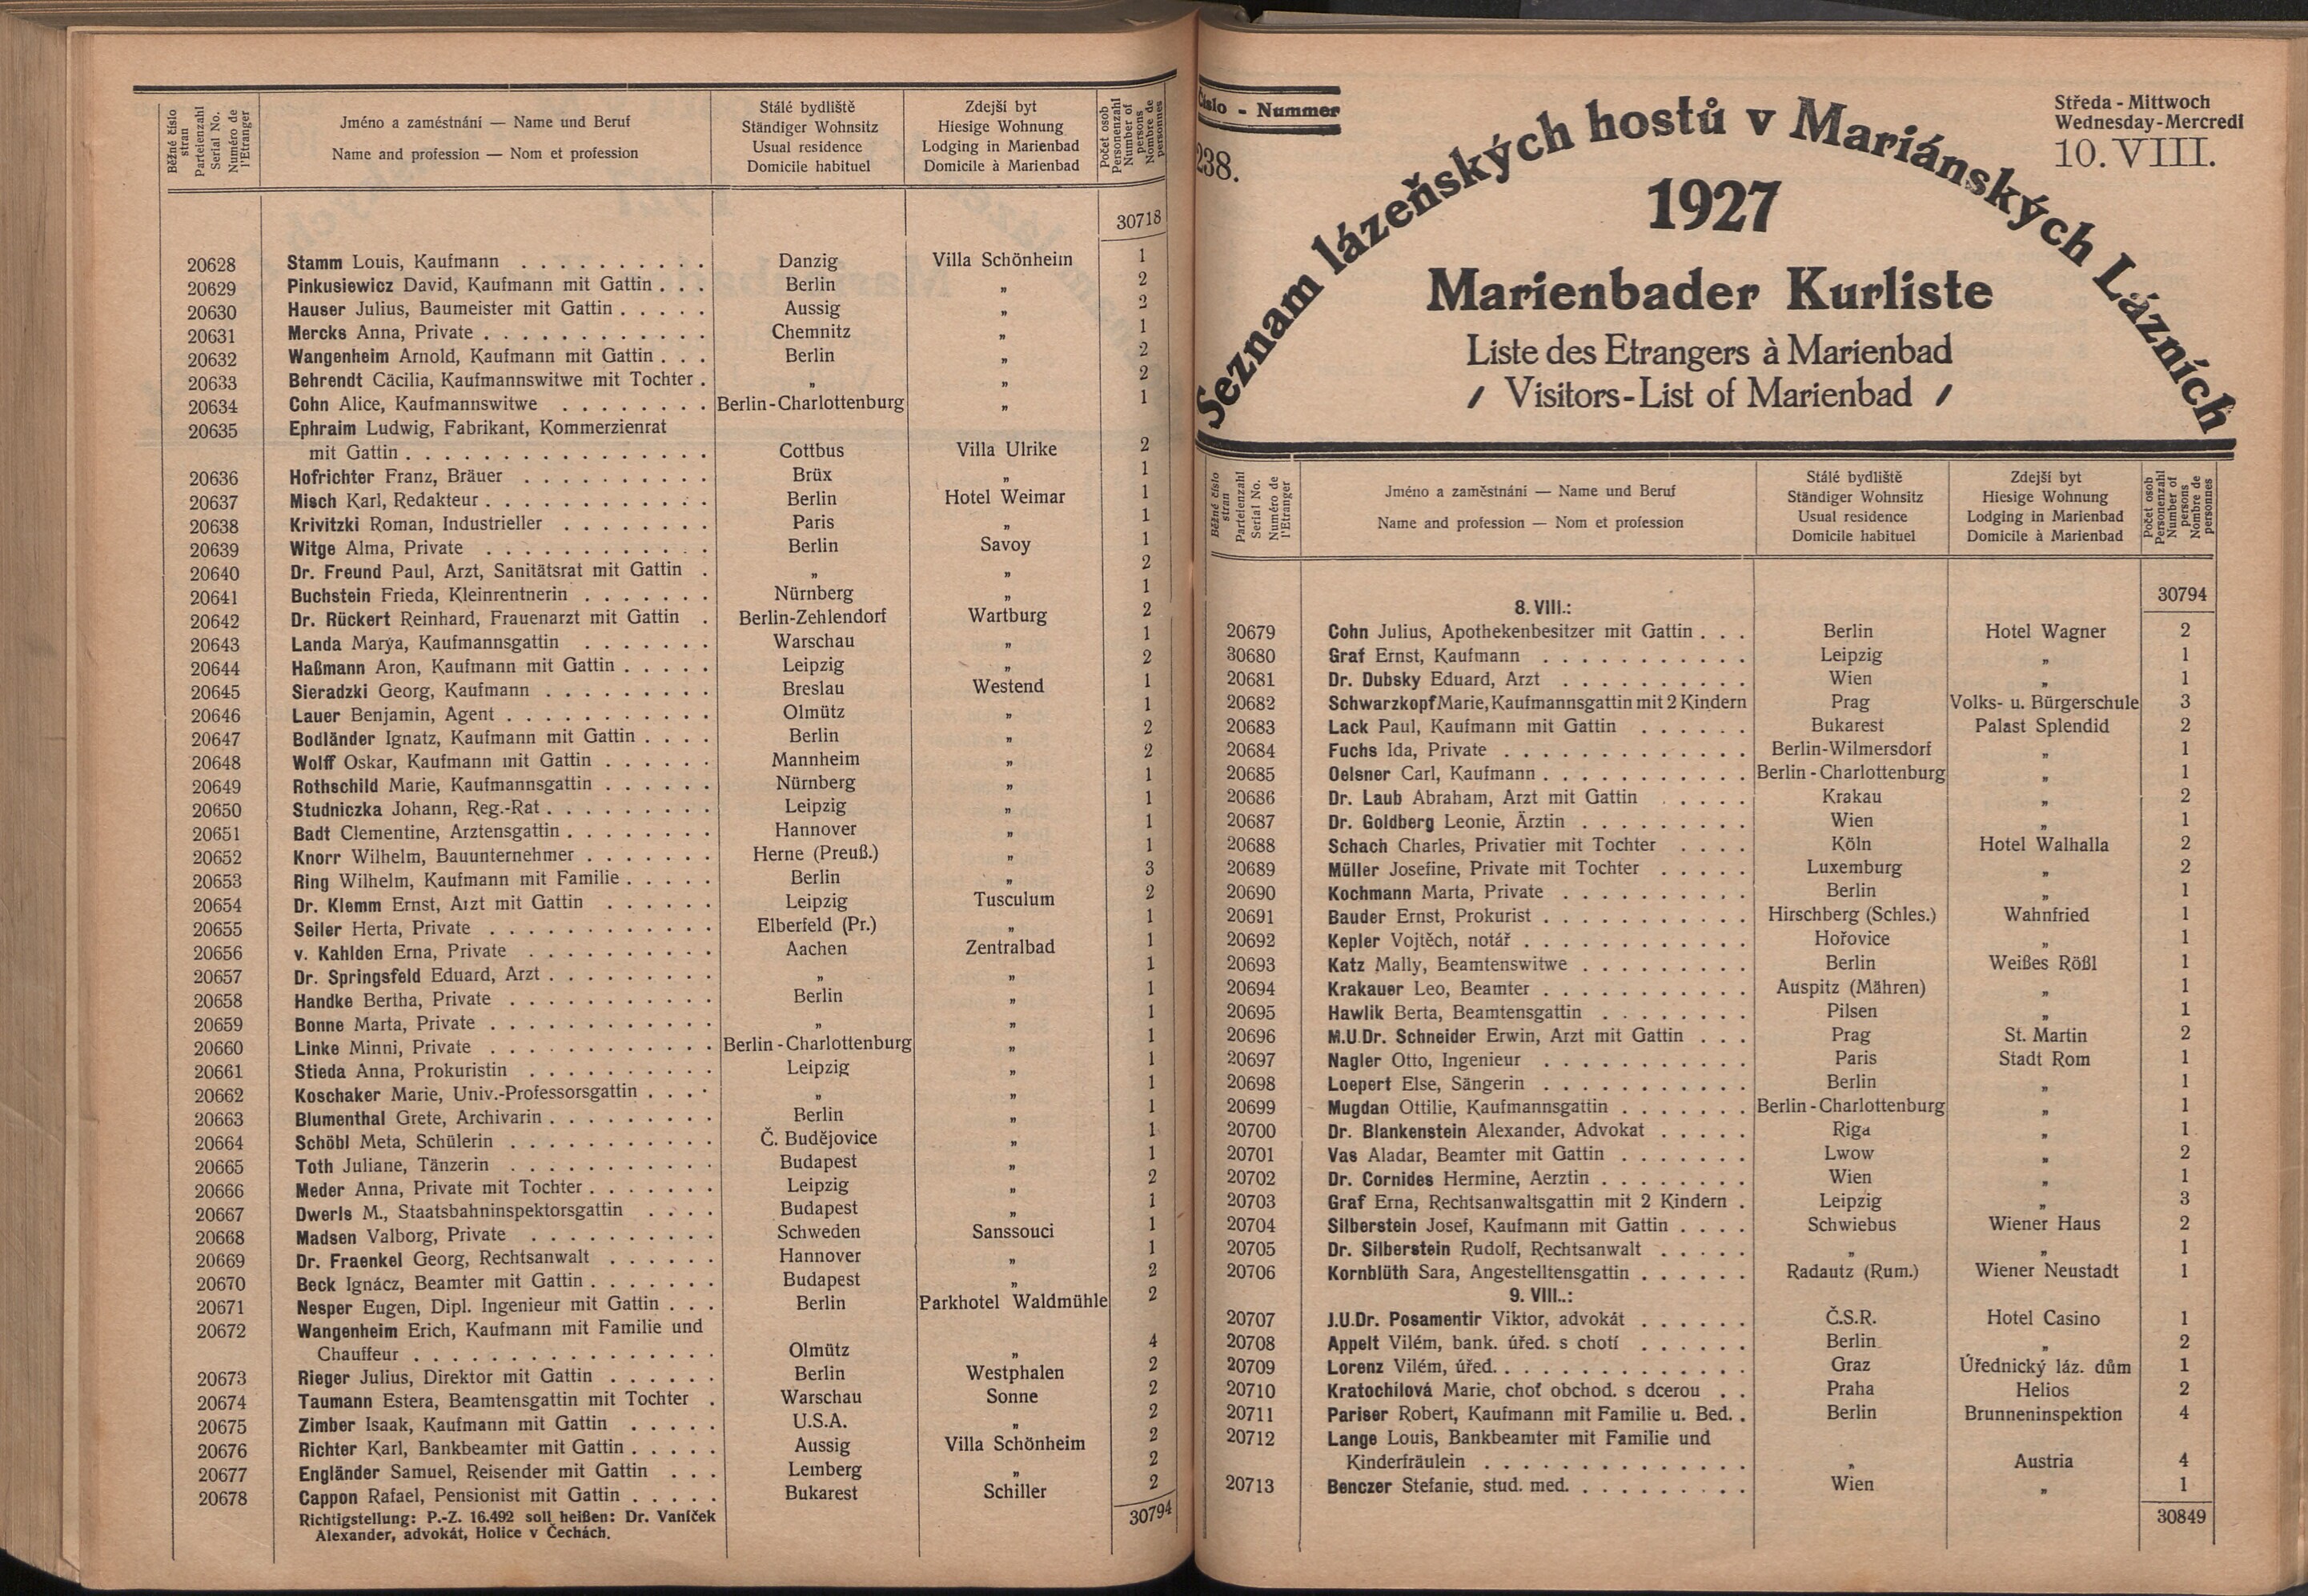 319. soap-ch_knihovna_marienbader-kurliste-1927_3190